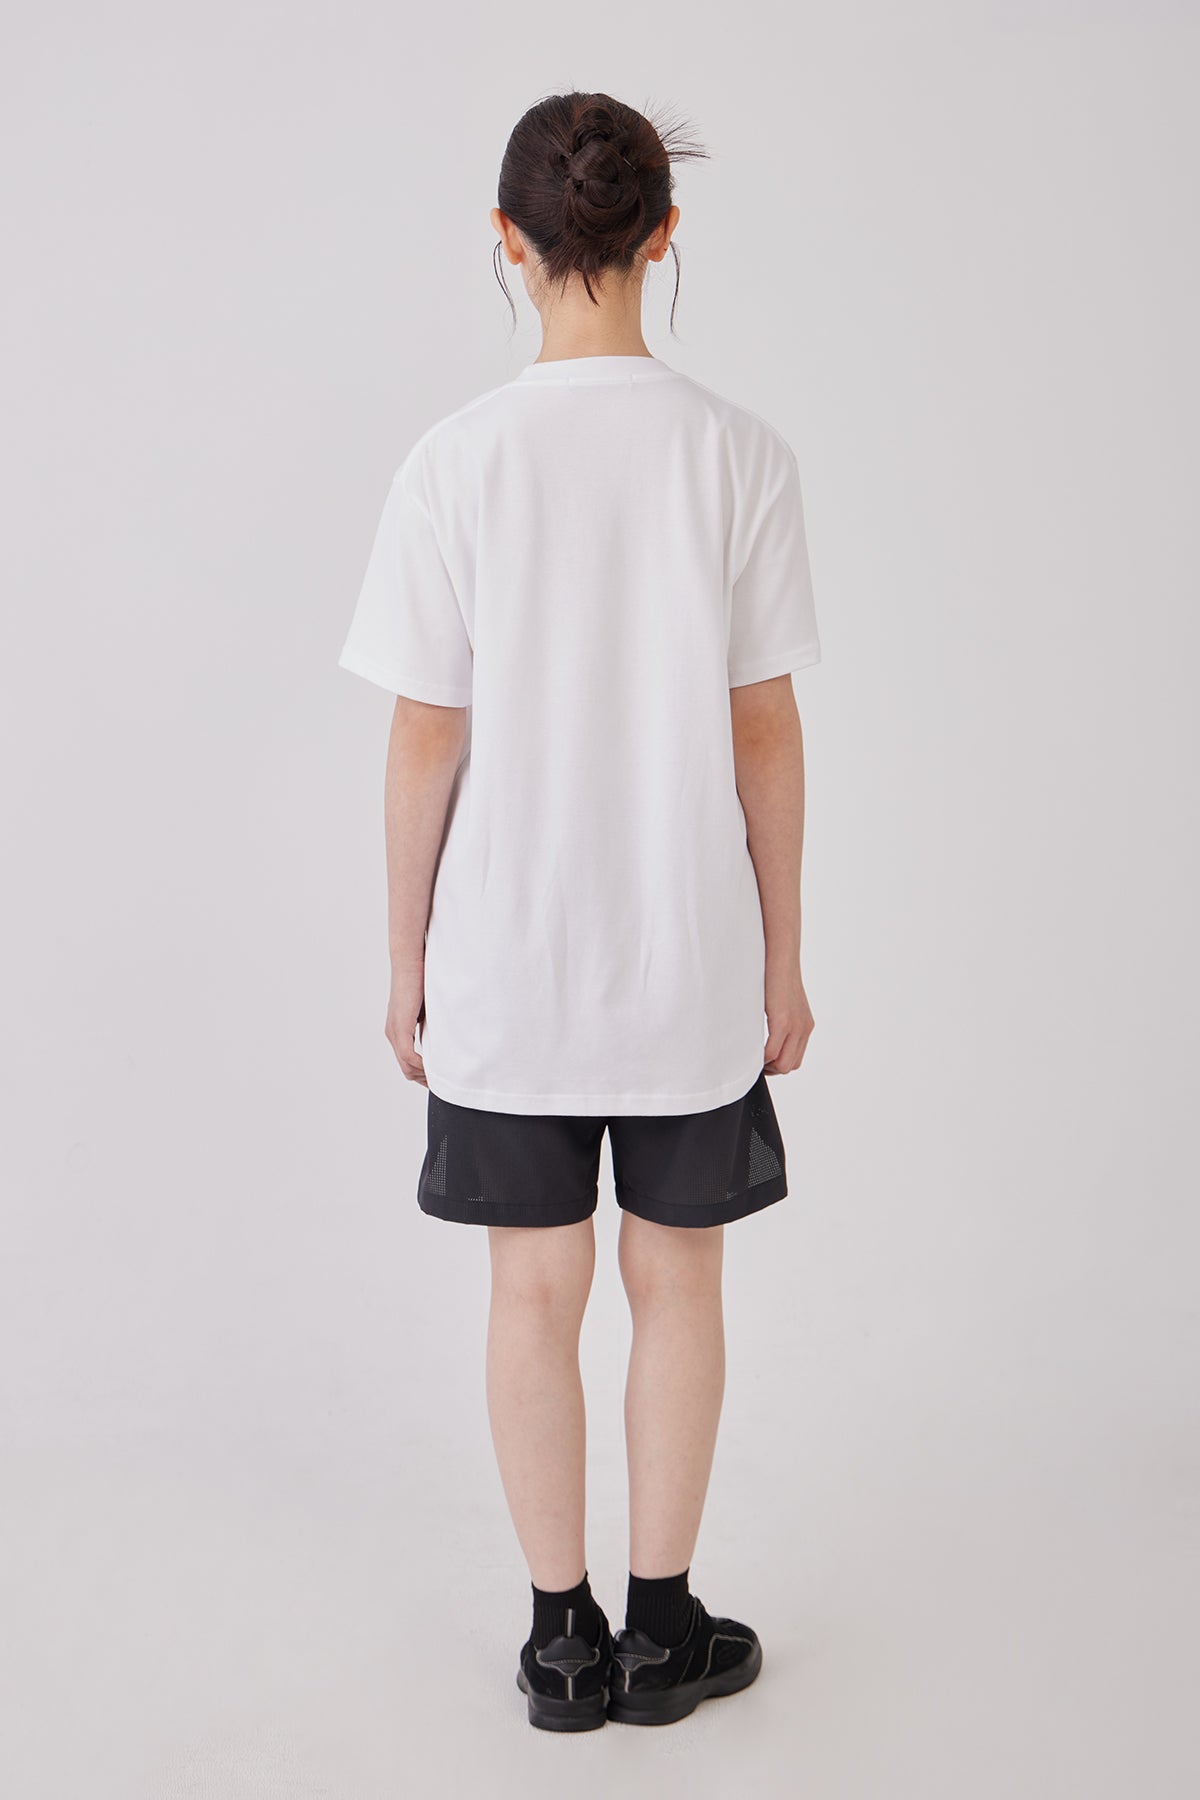 Off-White Daily Basis T-shirt